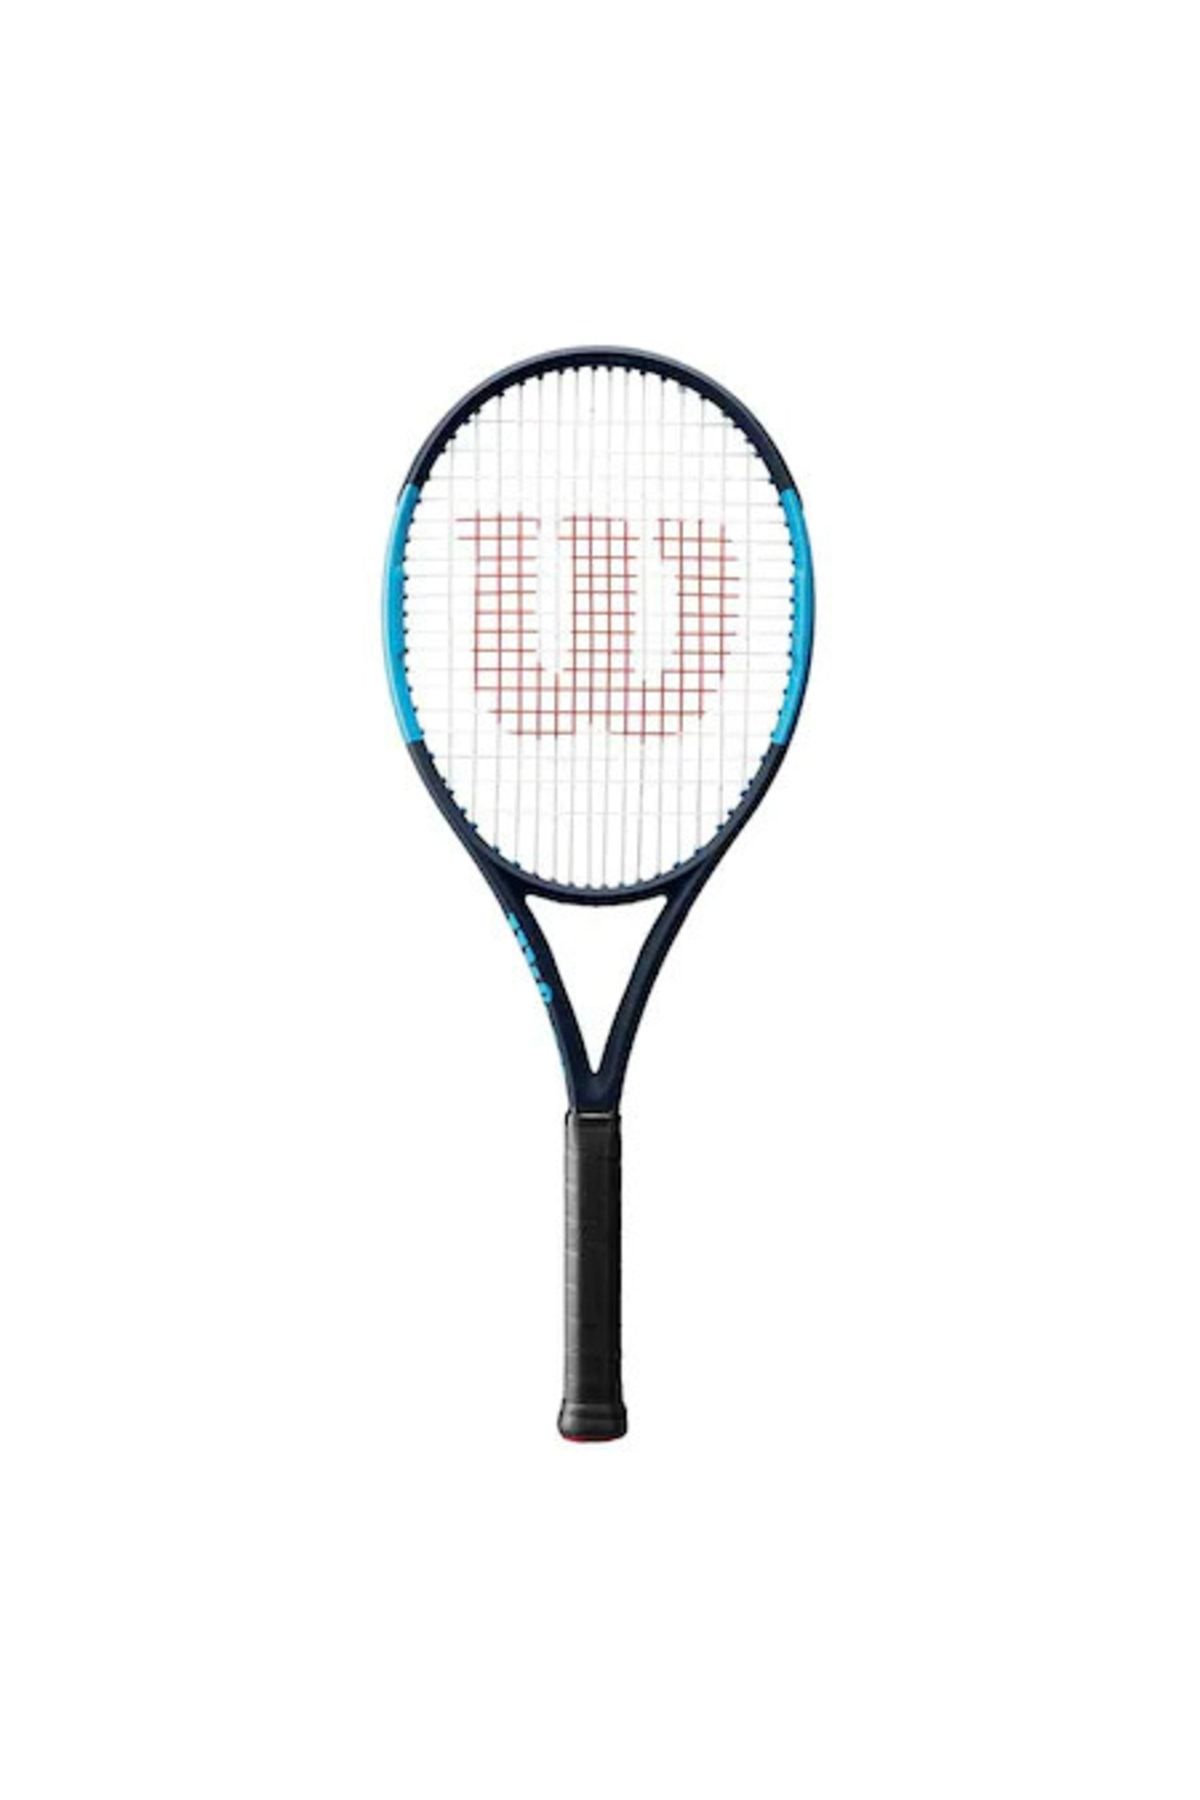 Wilson Ultra 110 Tenis Raketi